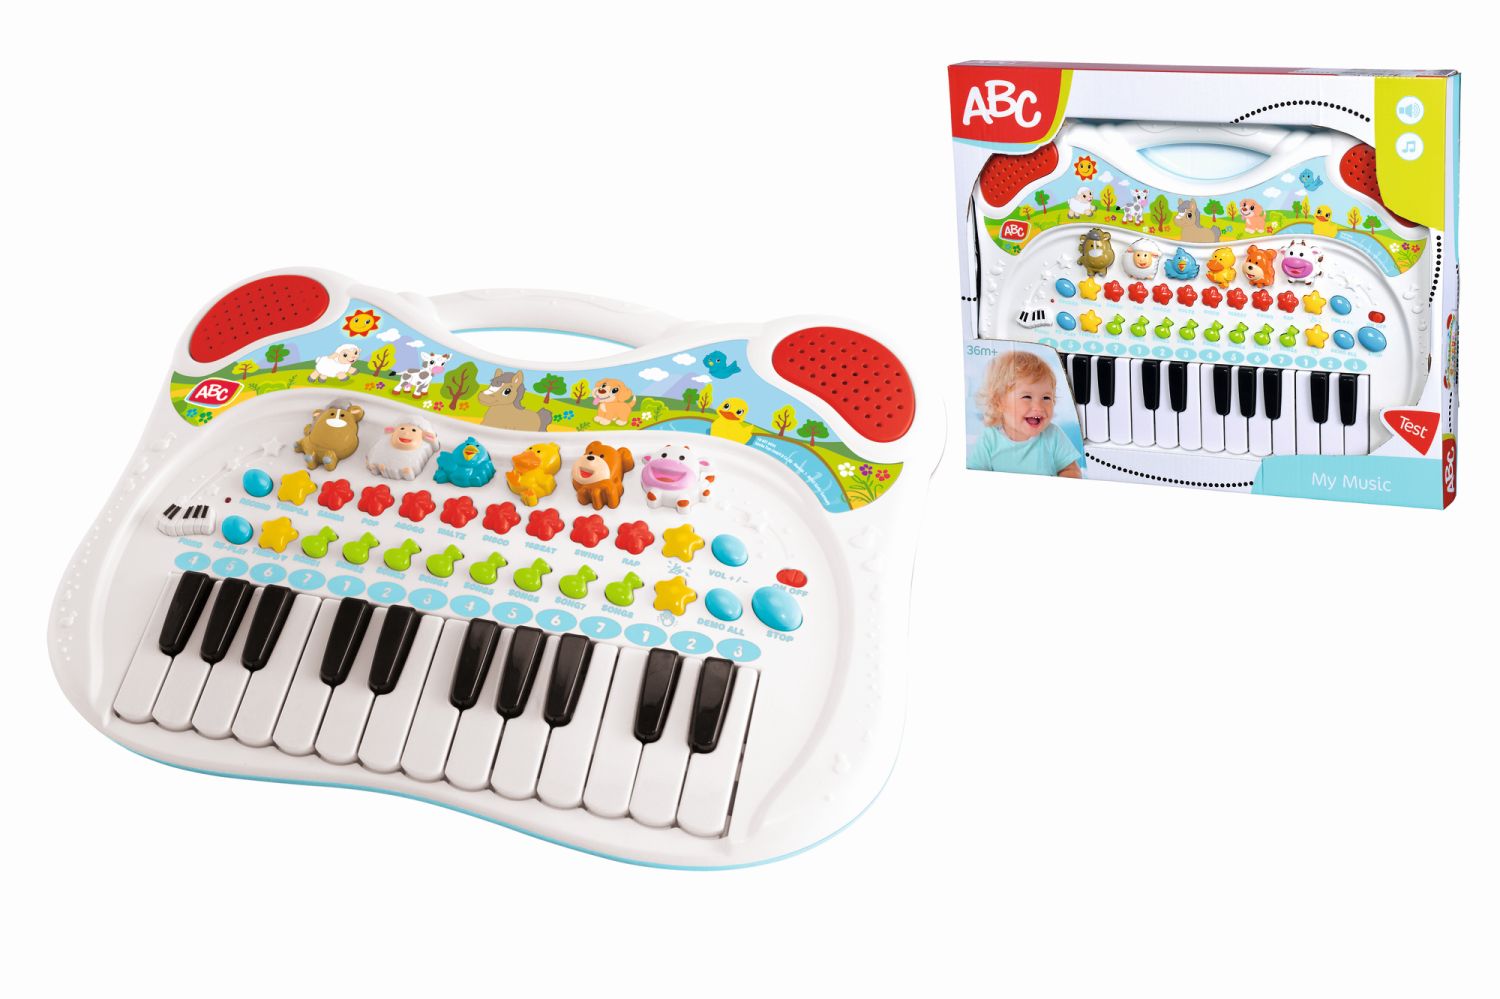 104010044 Tier ABC Simba Toys Keyboard